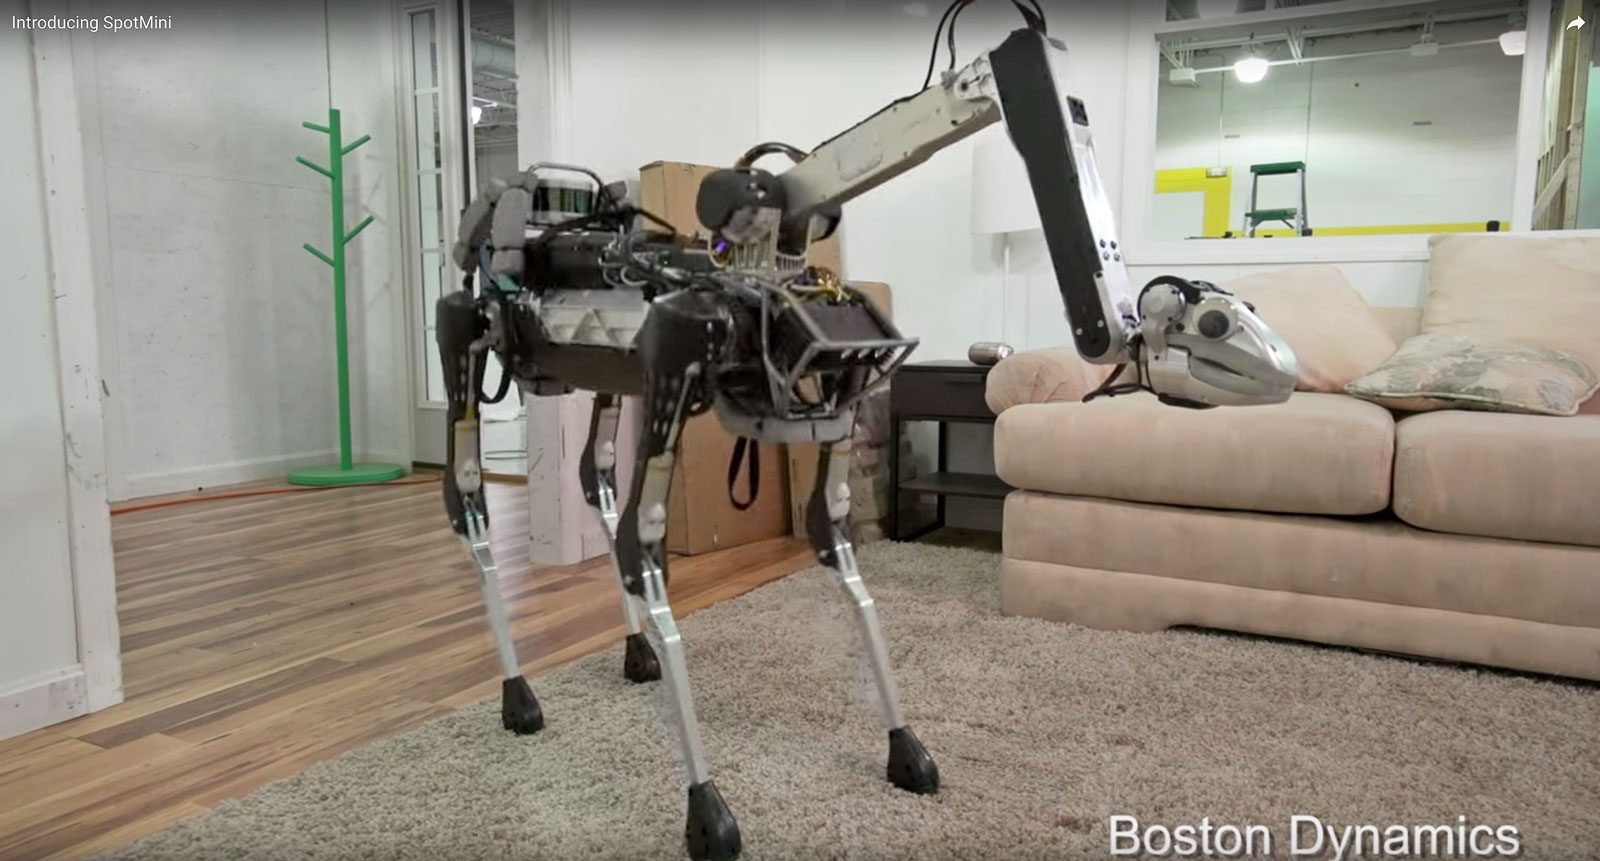 advanced robot dog